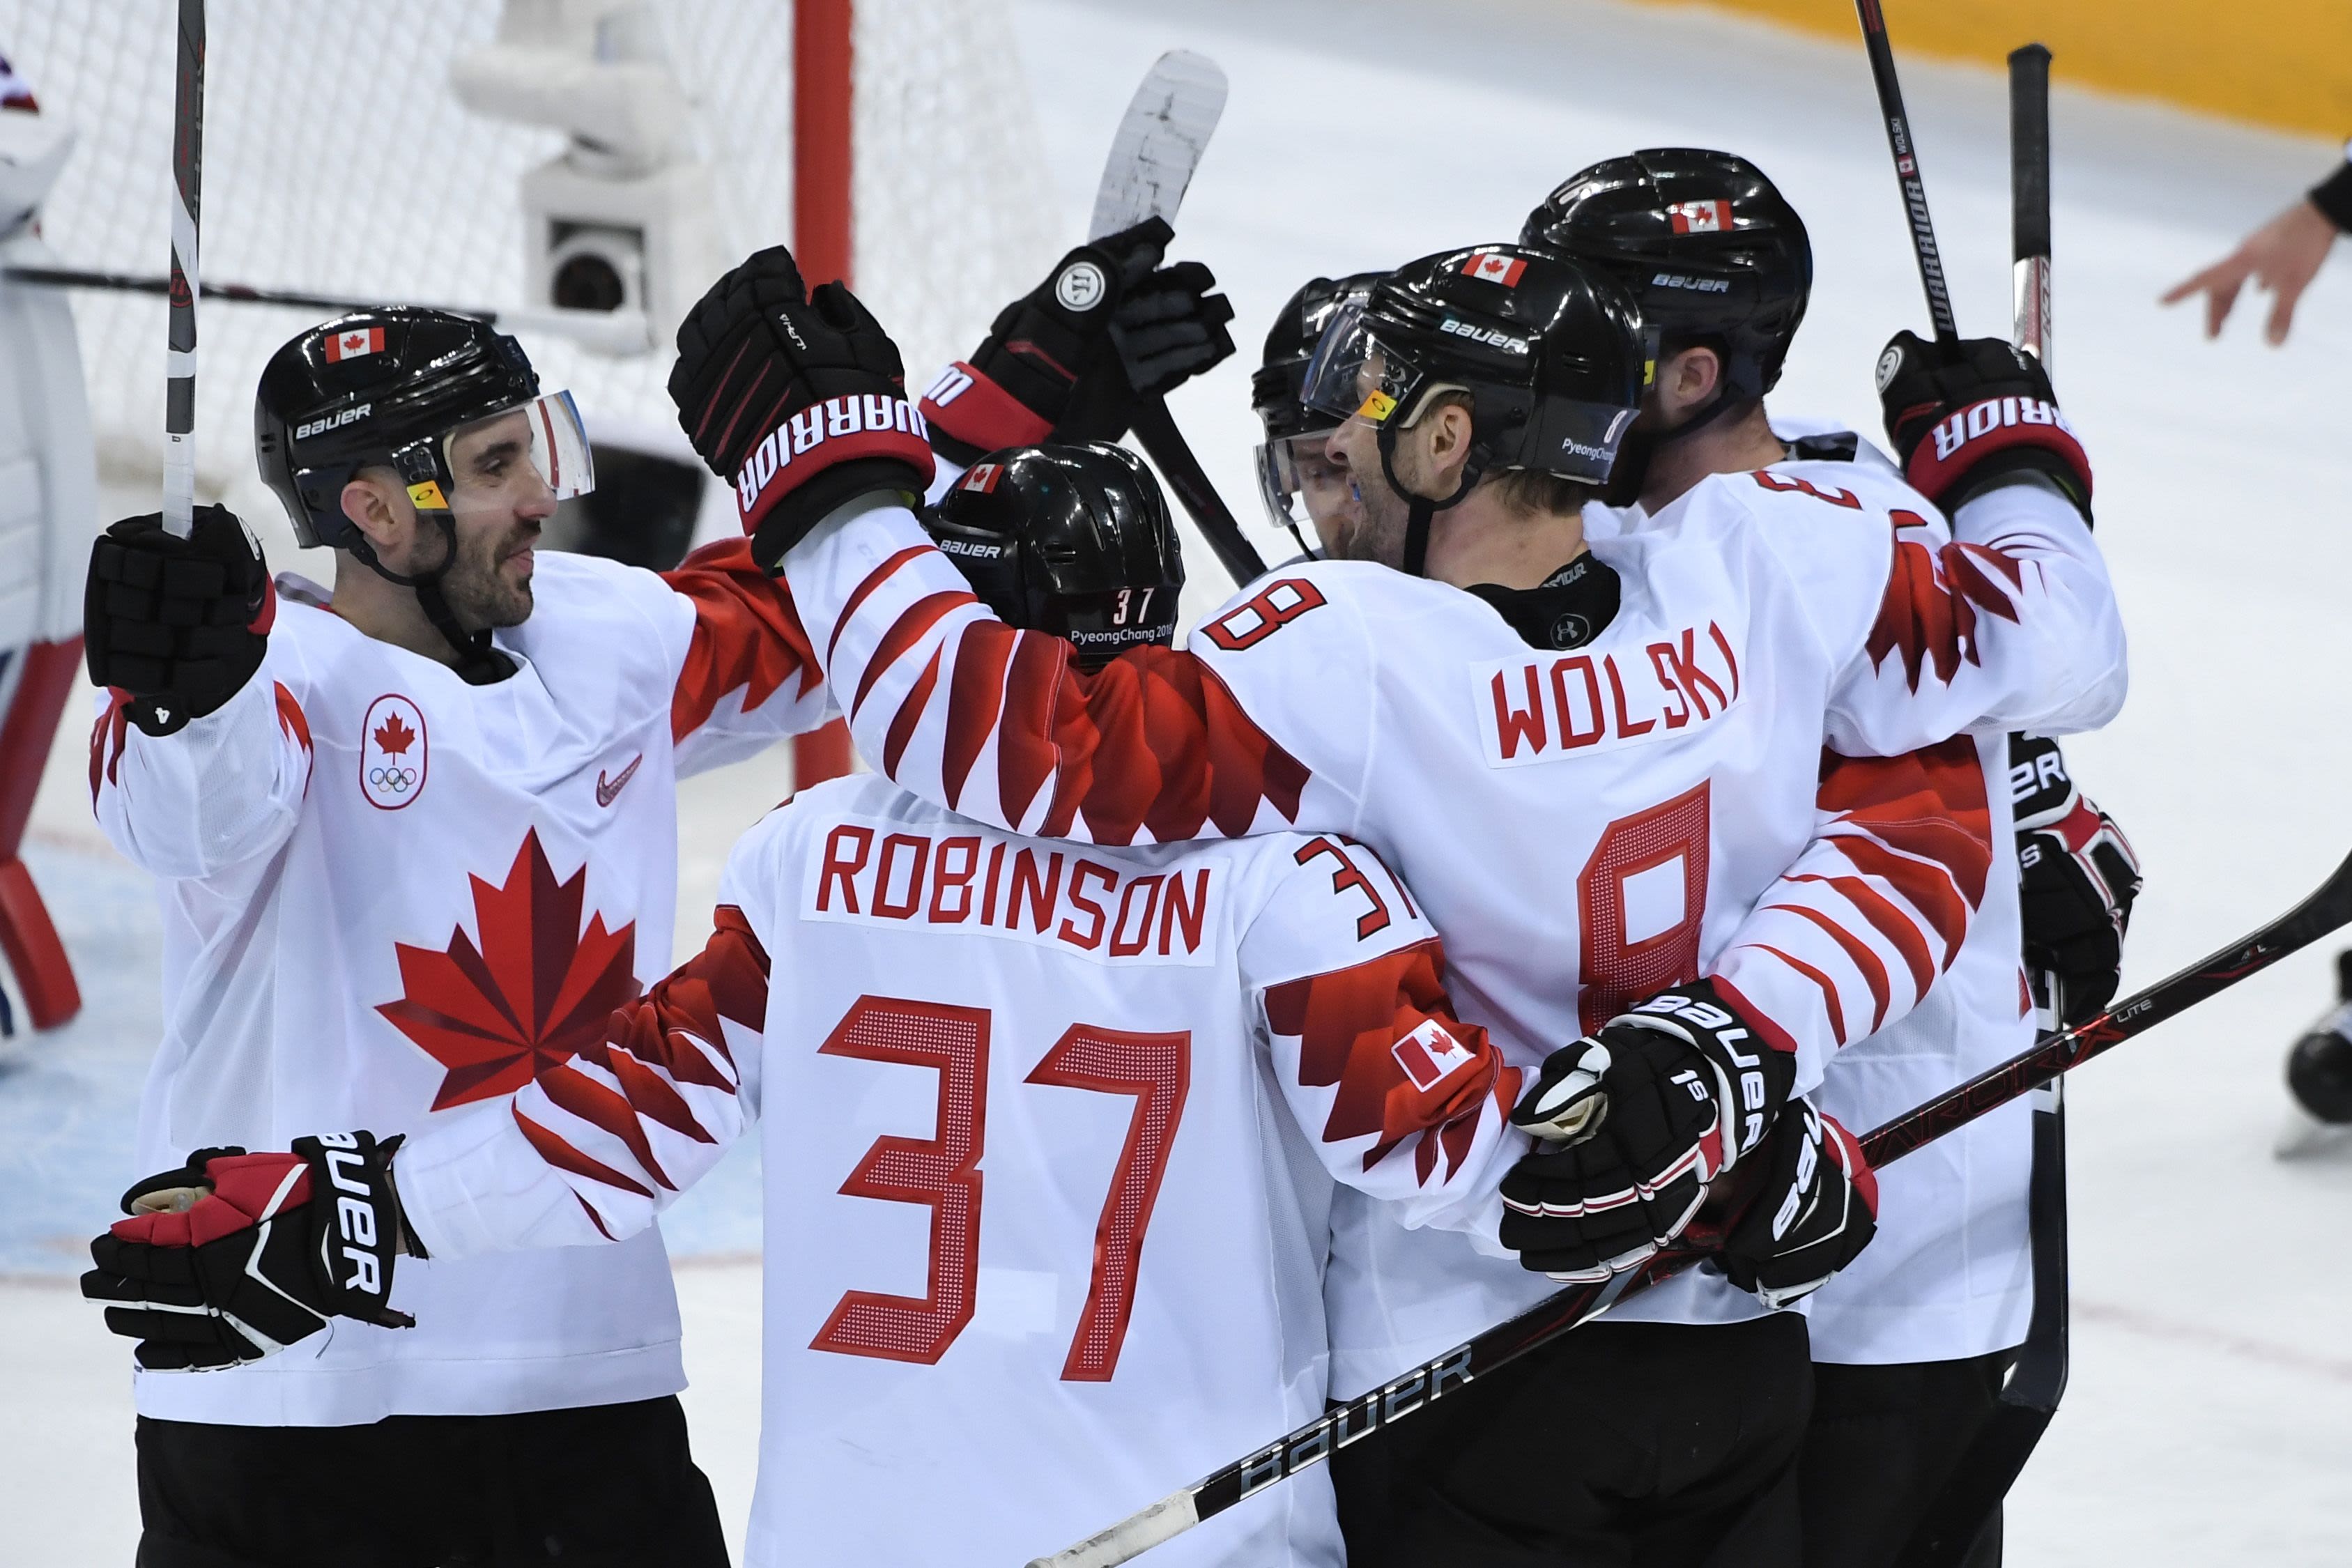 Team Canada takes silver at IIHF World Championship - Team Canada